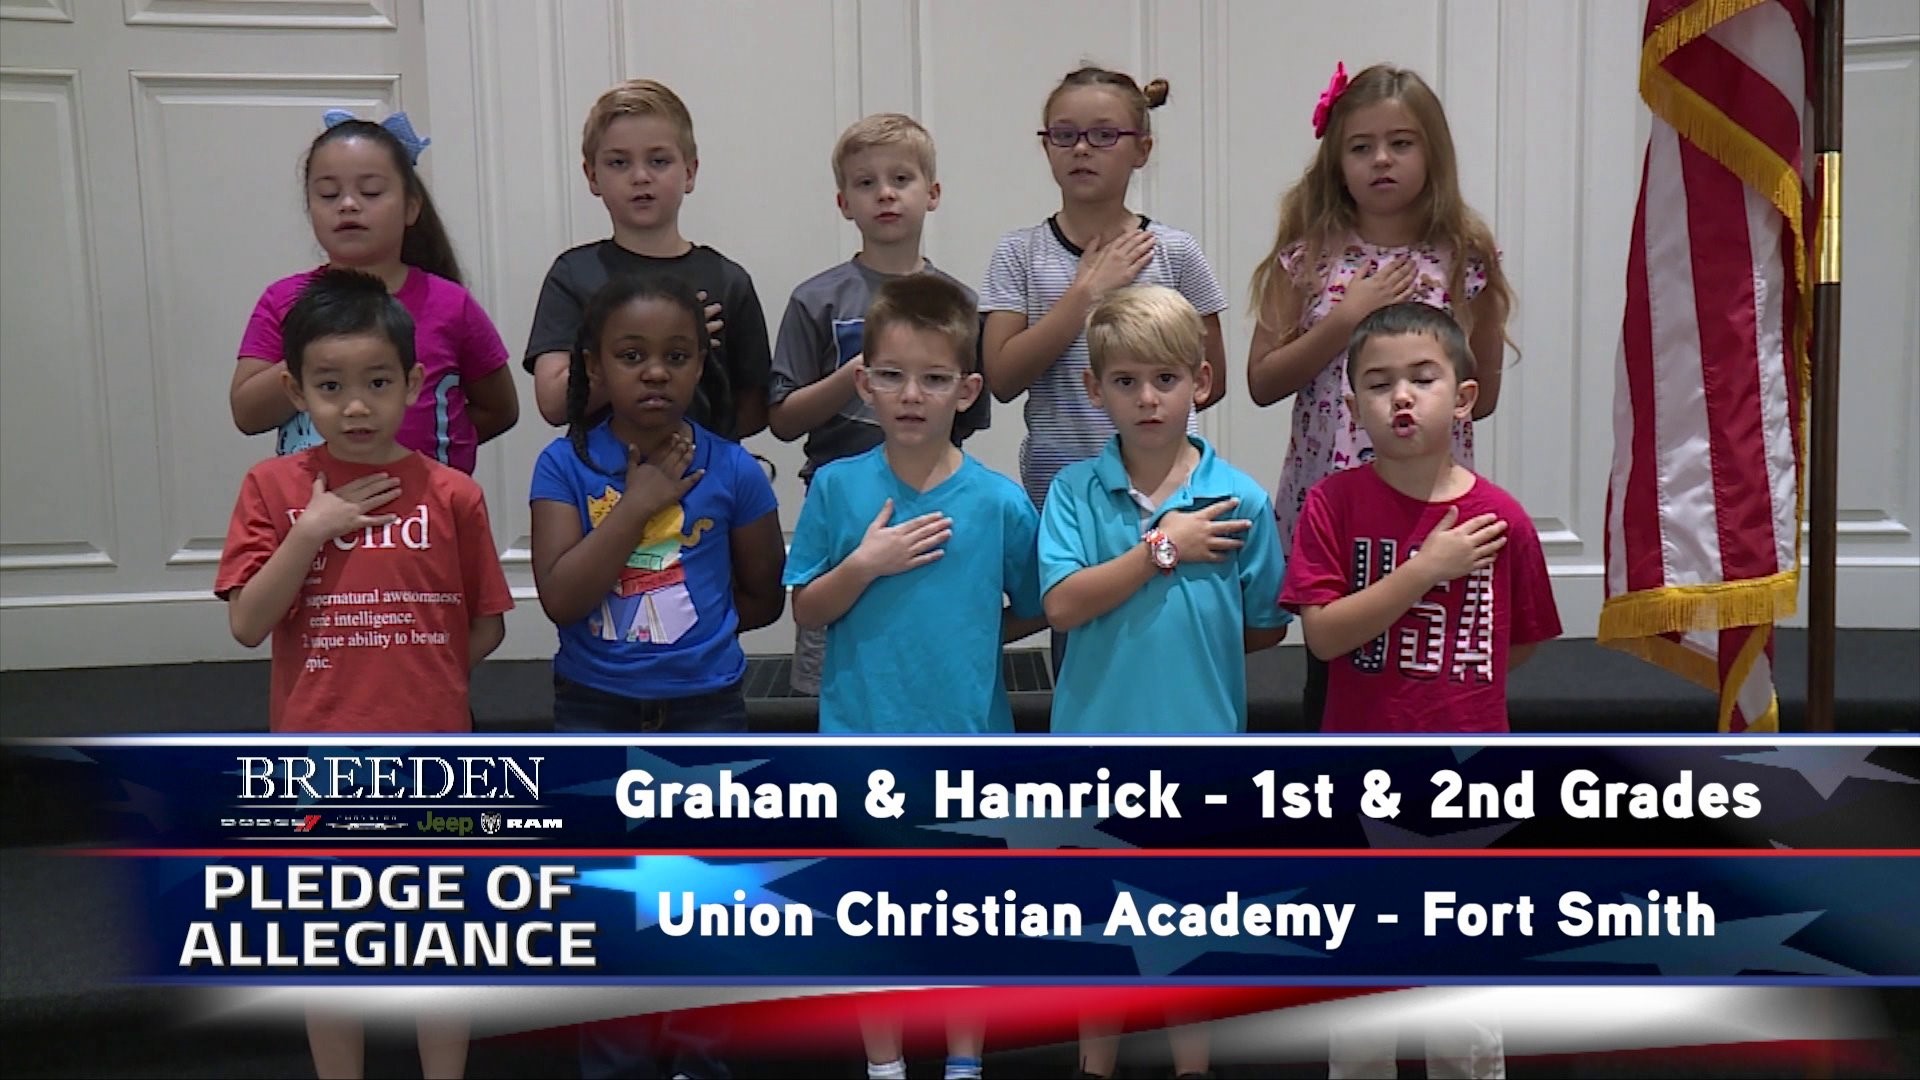 Graham & Hamrick 1st & 2nd Grade, Union Christian Academy, Fort Smith